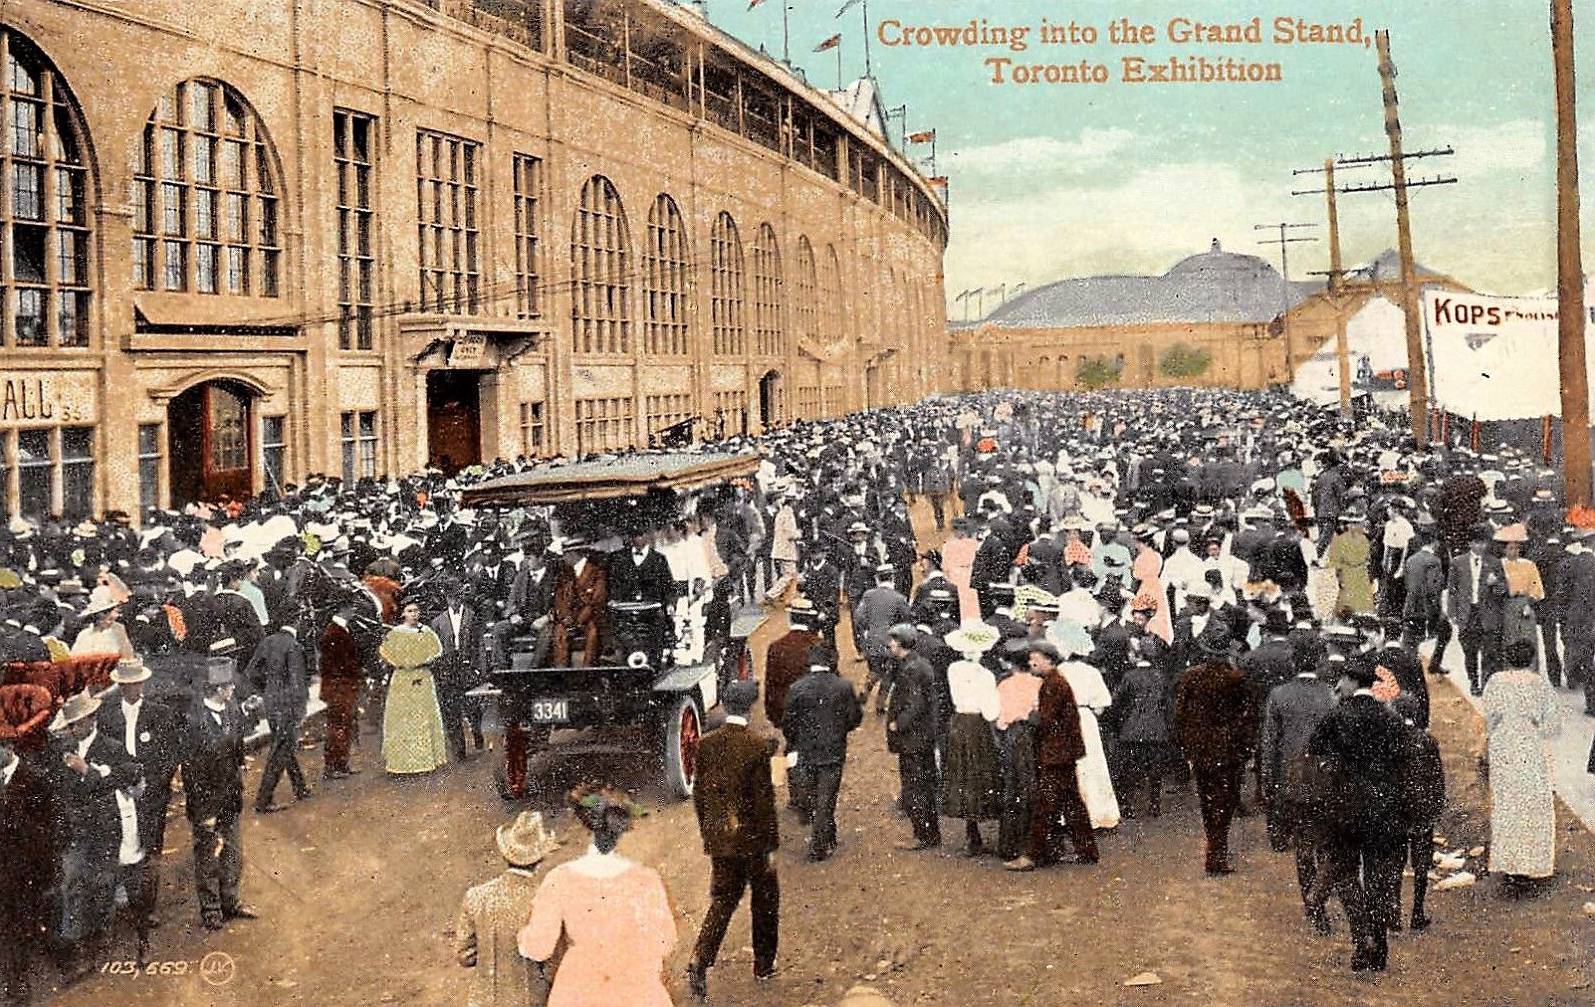 xx postcard - toronto - exhibition - the grand stand entrances - big crowd - tinted - c1910